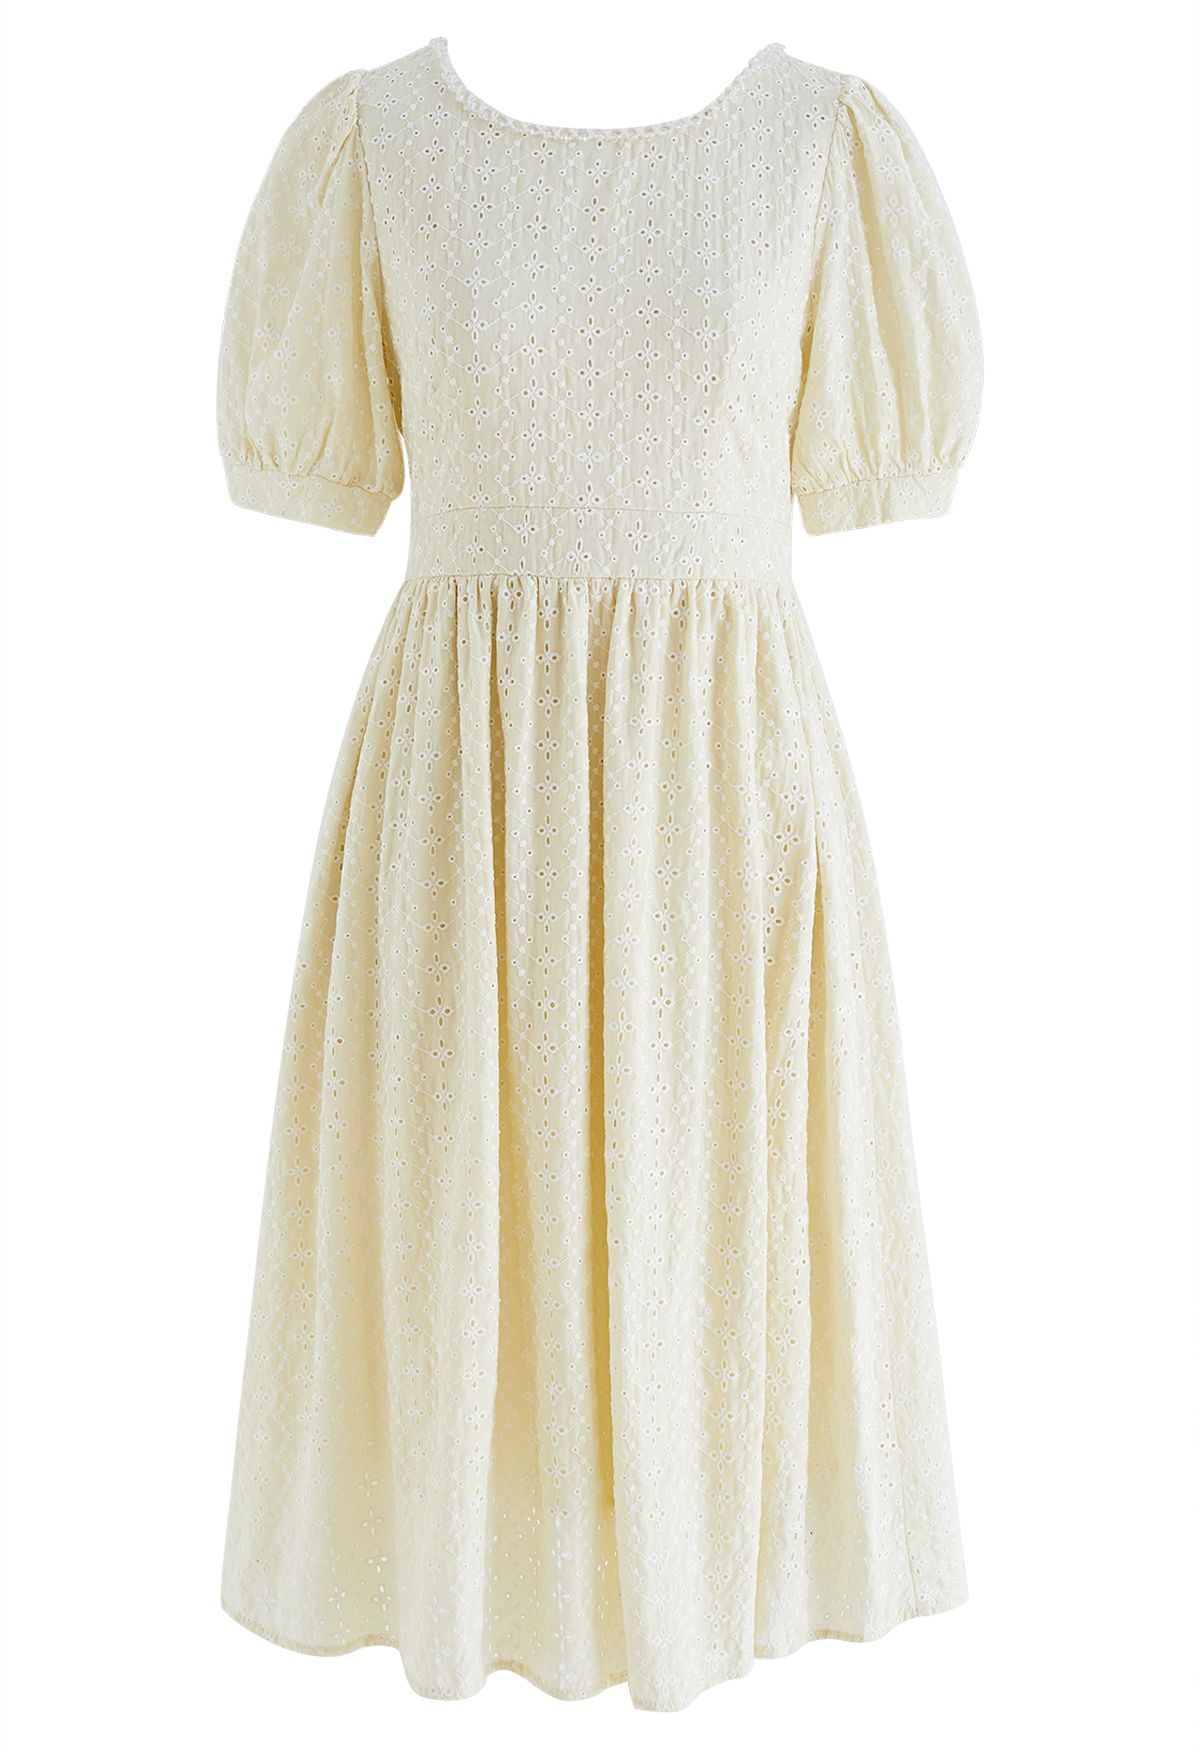 Floret Eyelet Bowknot Back Midi Dress in Light Yellow - Retro, Indie ...